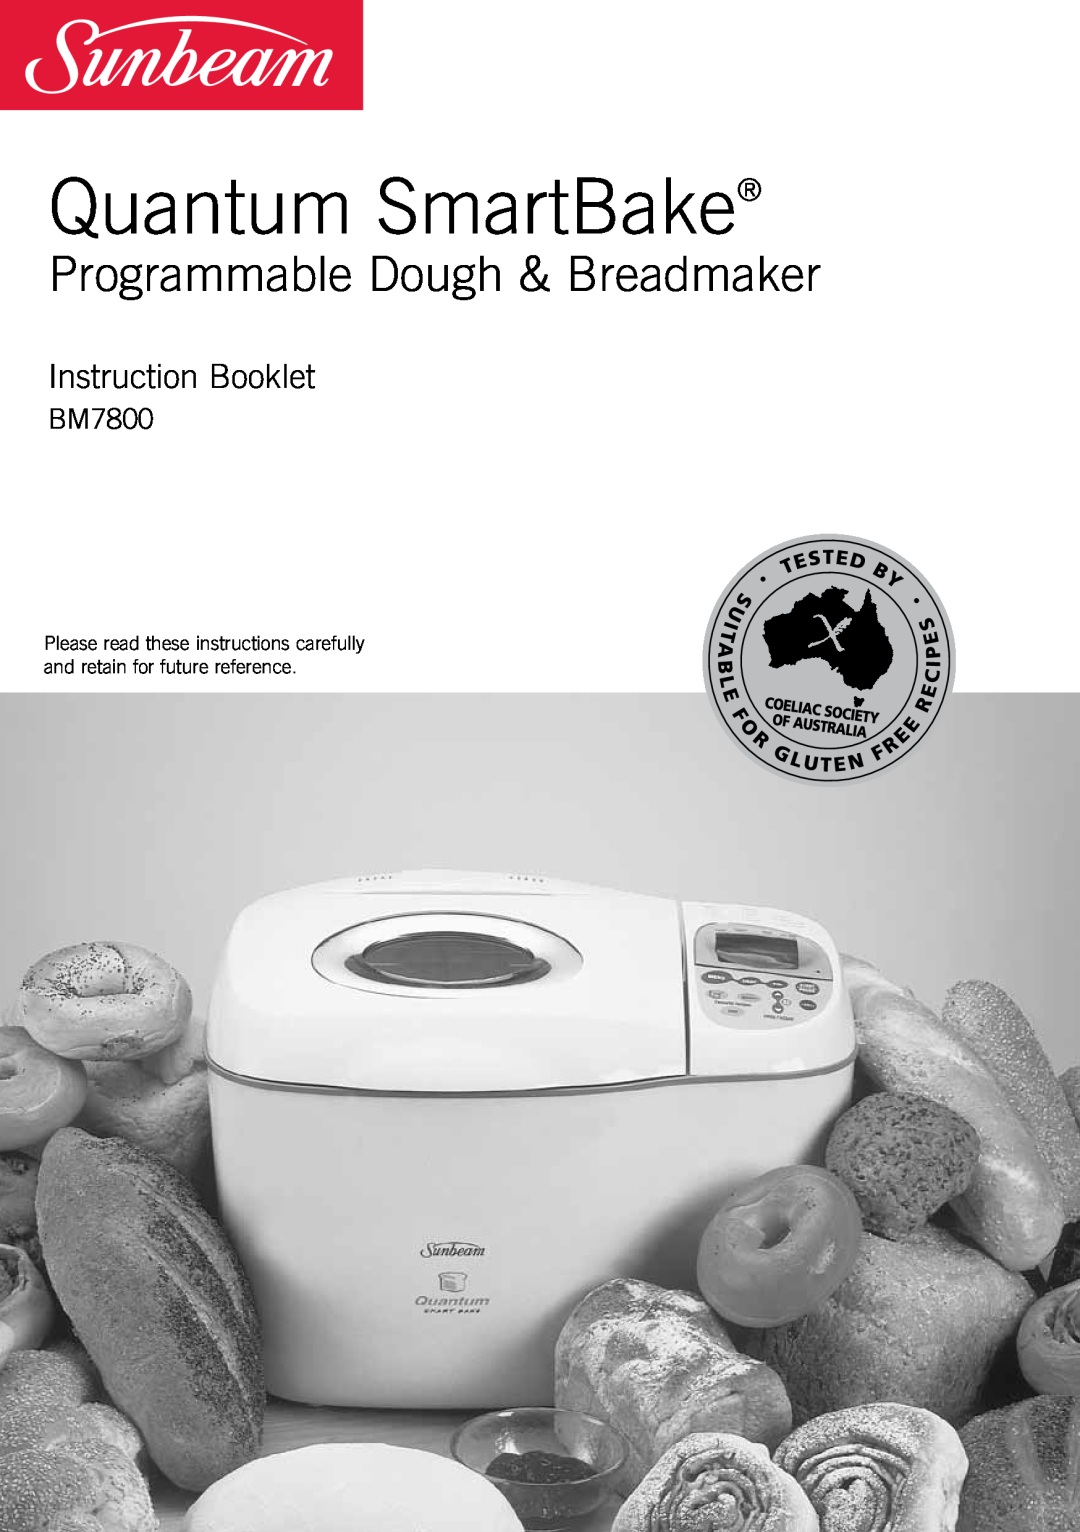 Sunbeam BM7800 manual Instruction Booklet, Quantum SmartBake, Programmable Dough & Breadmaker 